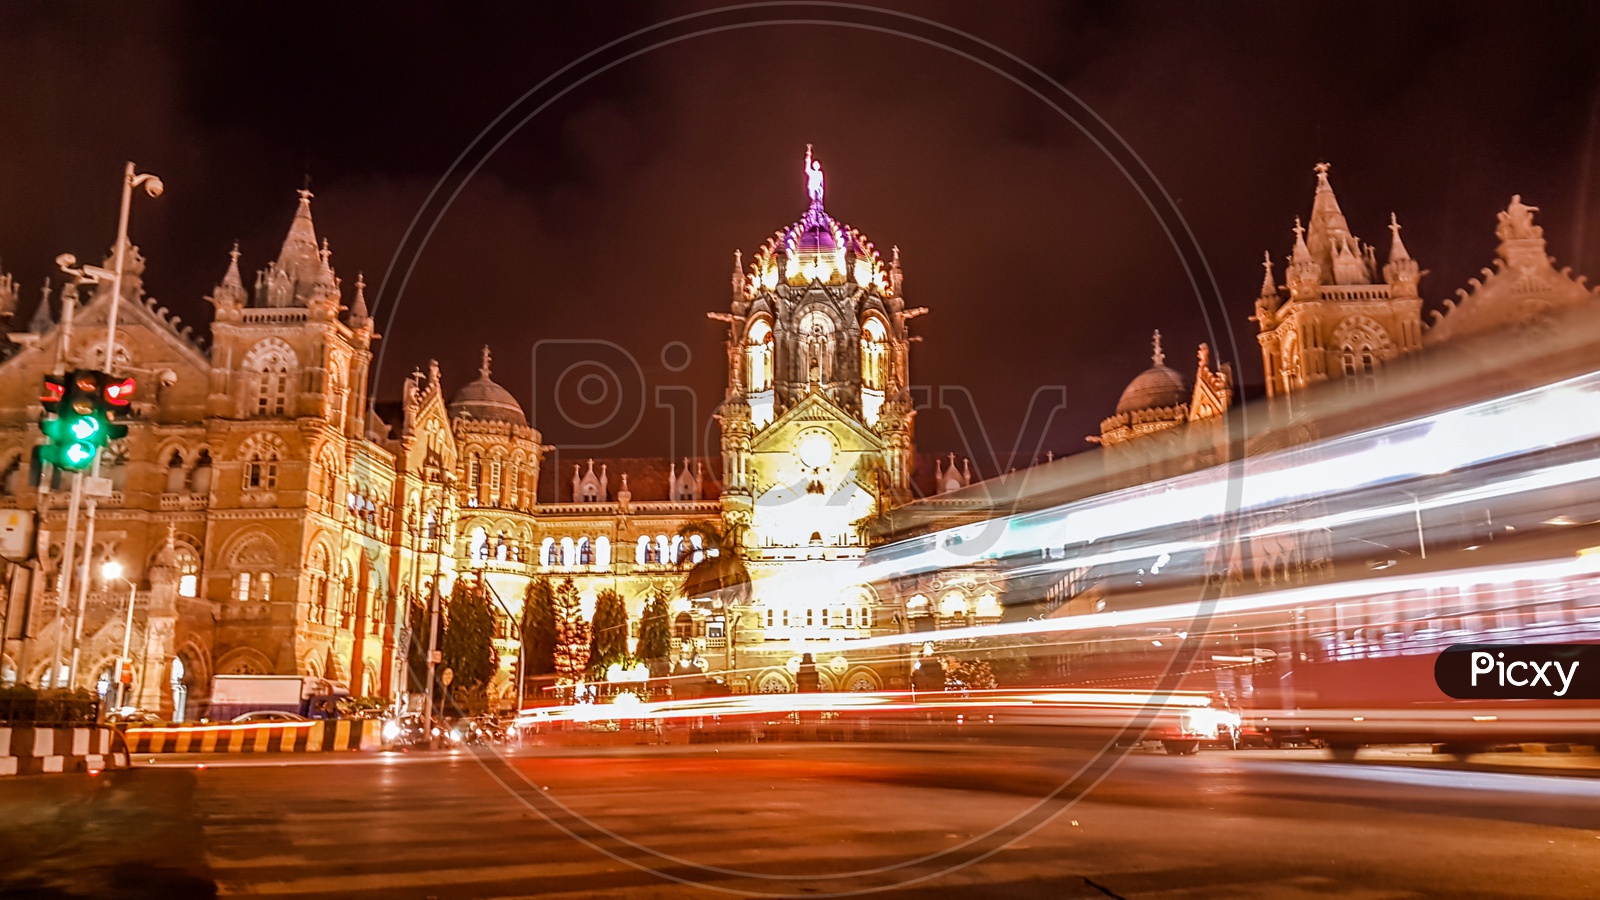 Mumbai CST  Or Chatrapati Shivaji Terminus